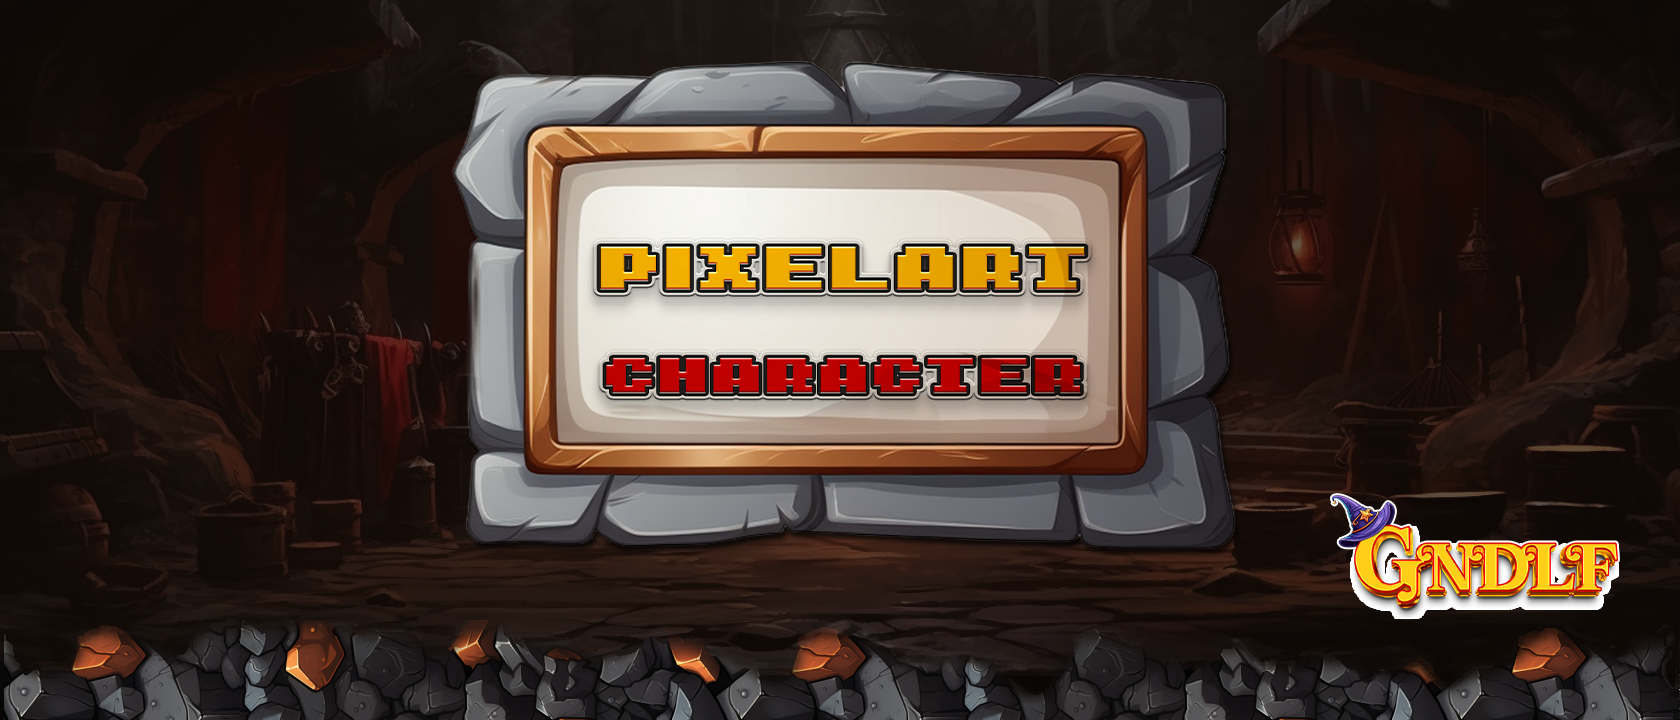 Pixel Art RPG Character